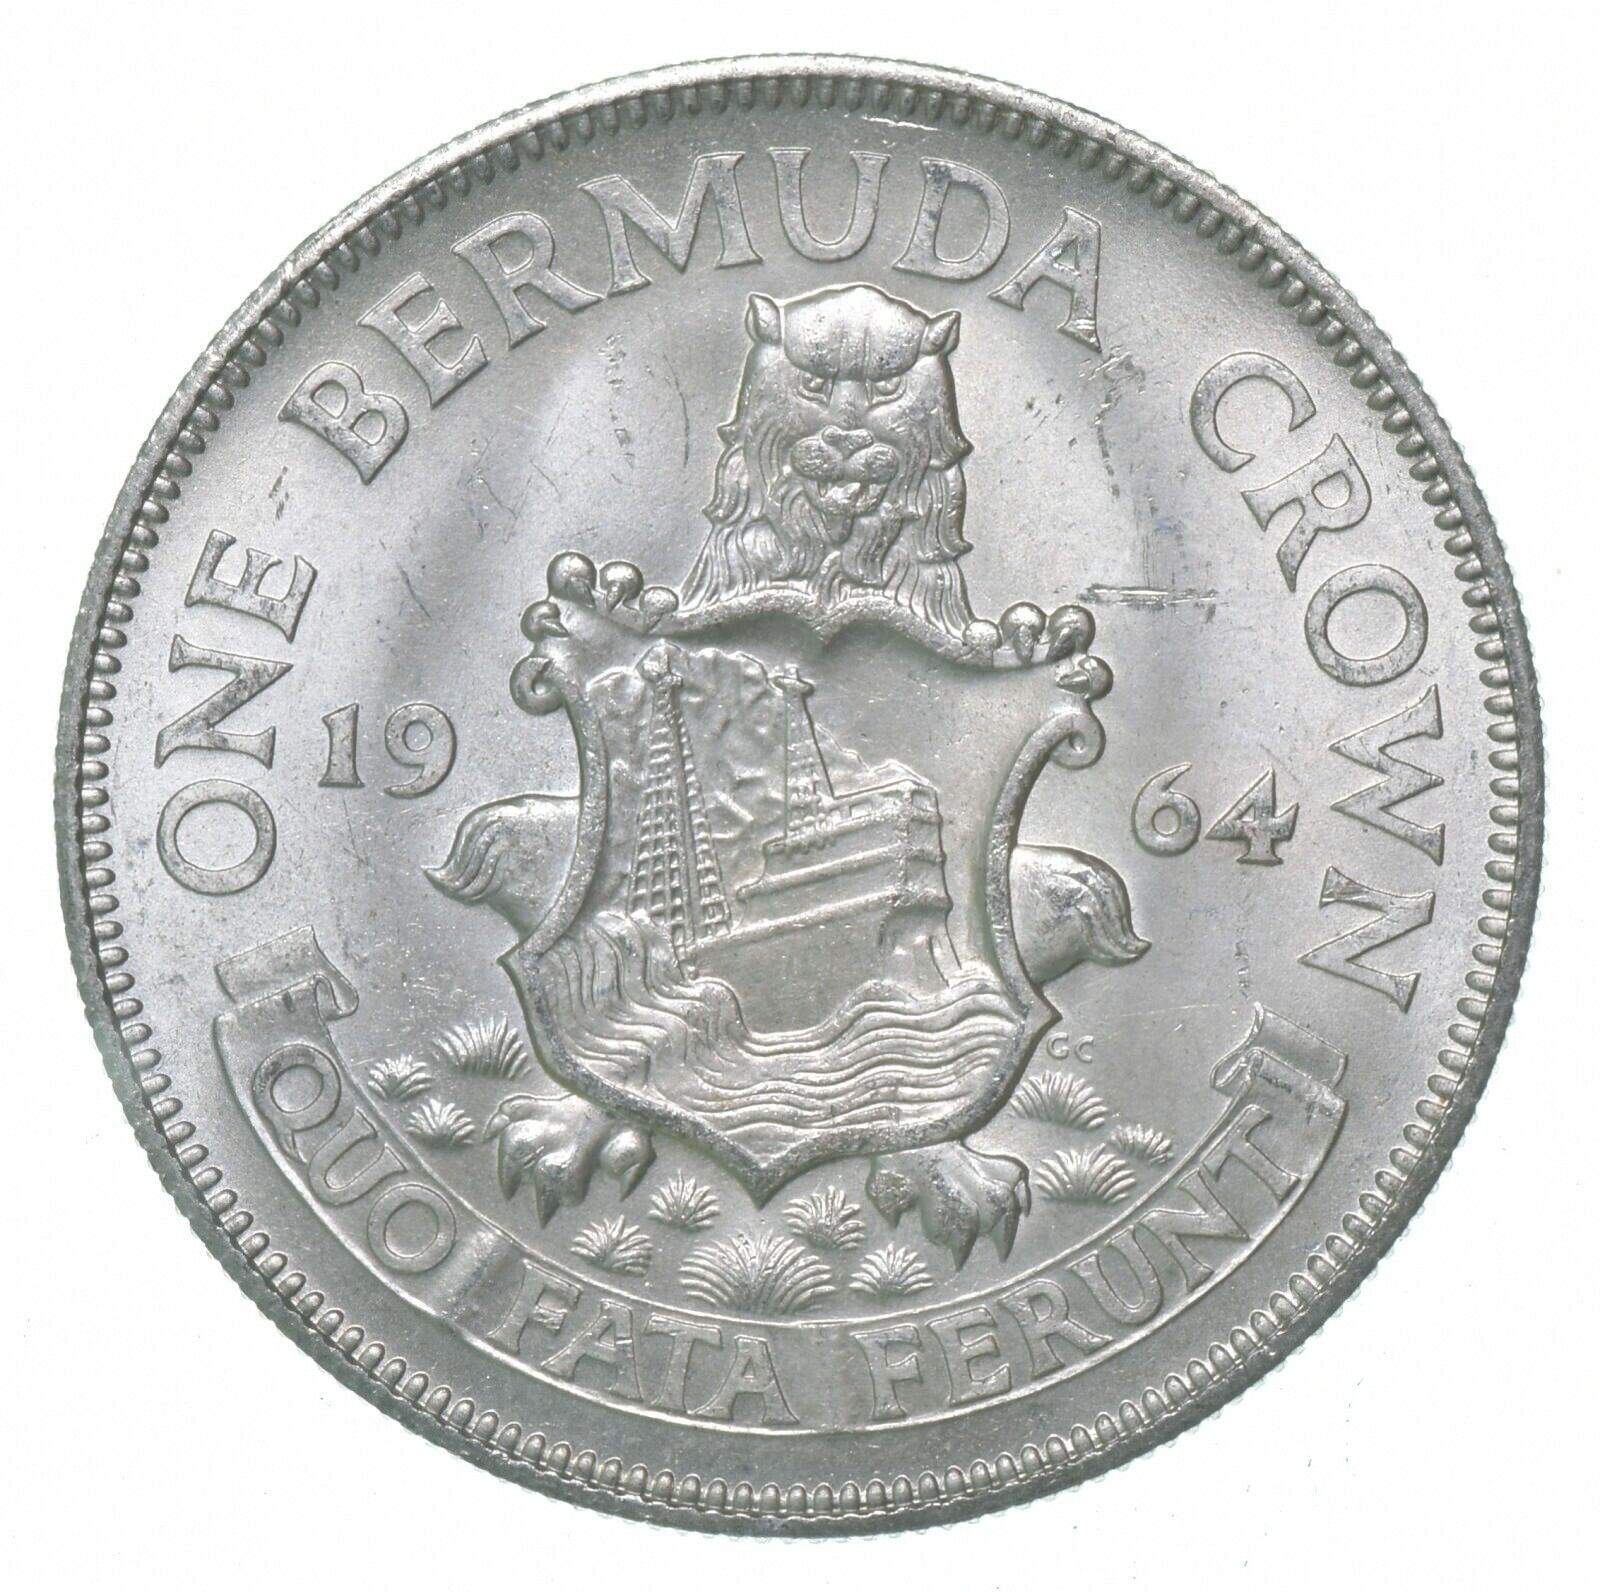 SILVER - Max 50% OFF Ranking TOP10 WORLD COIN 1964 Bermuda Silver 1 World Coin Crown